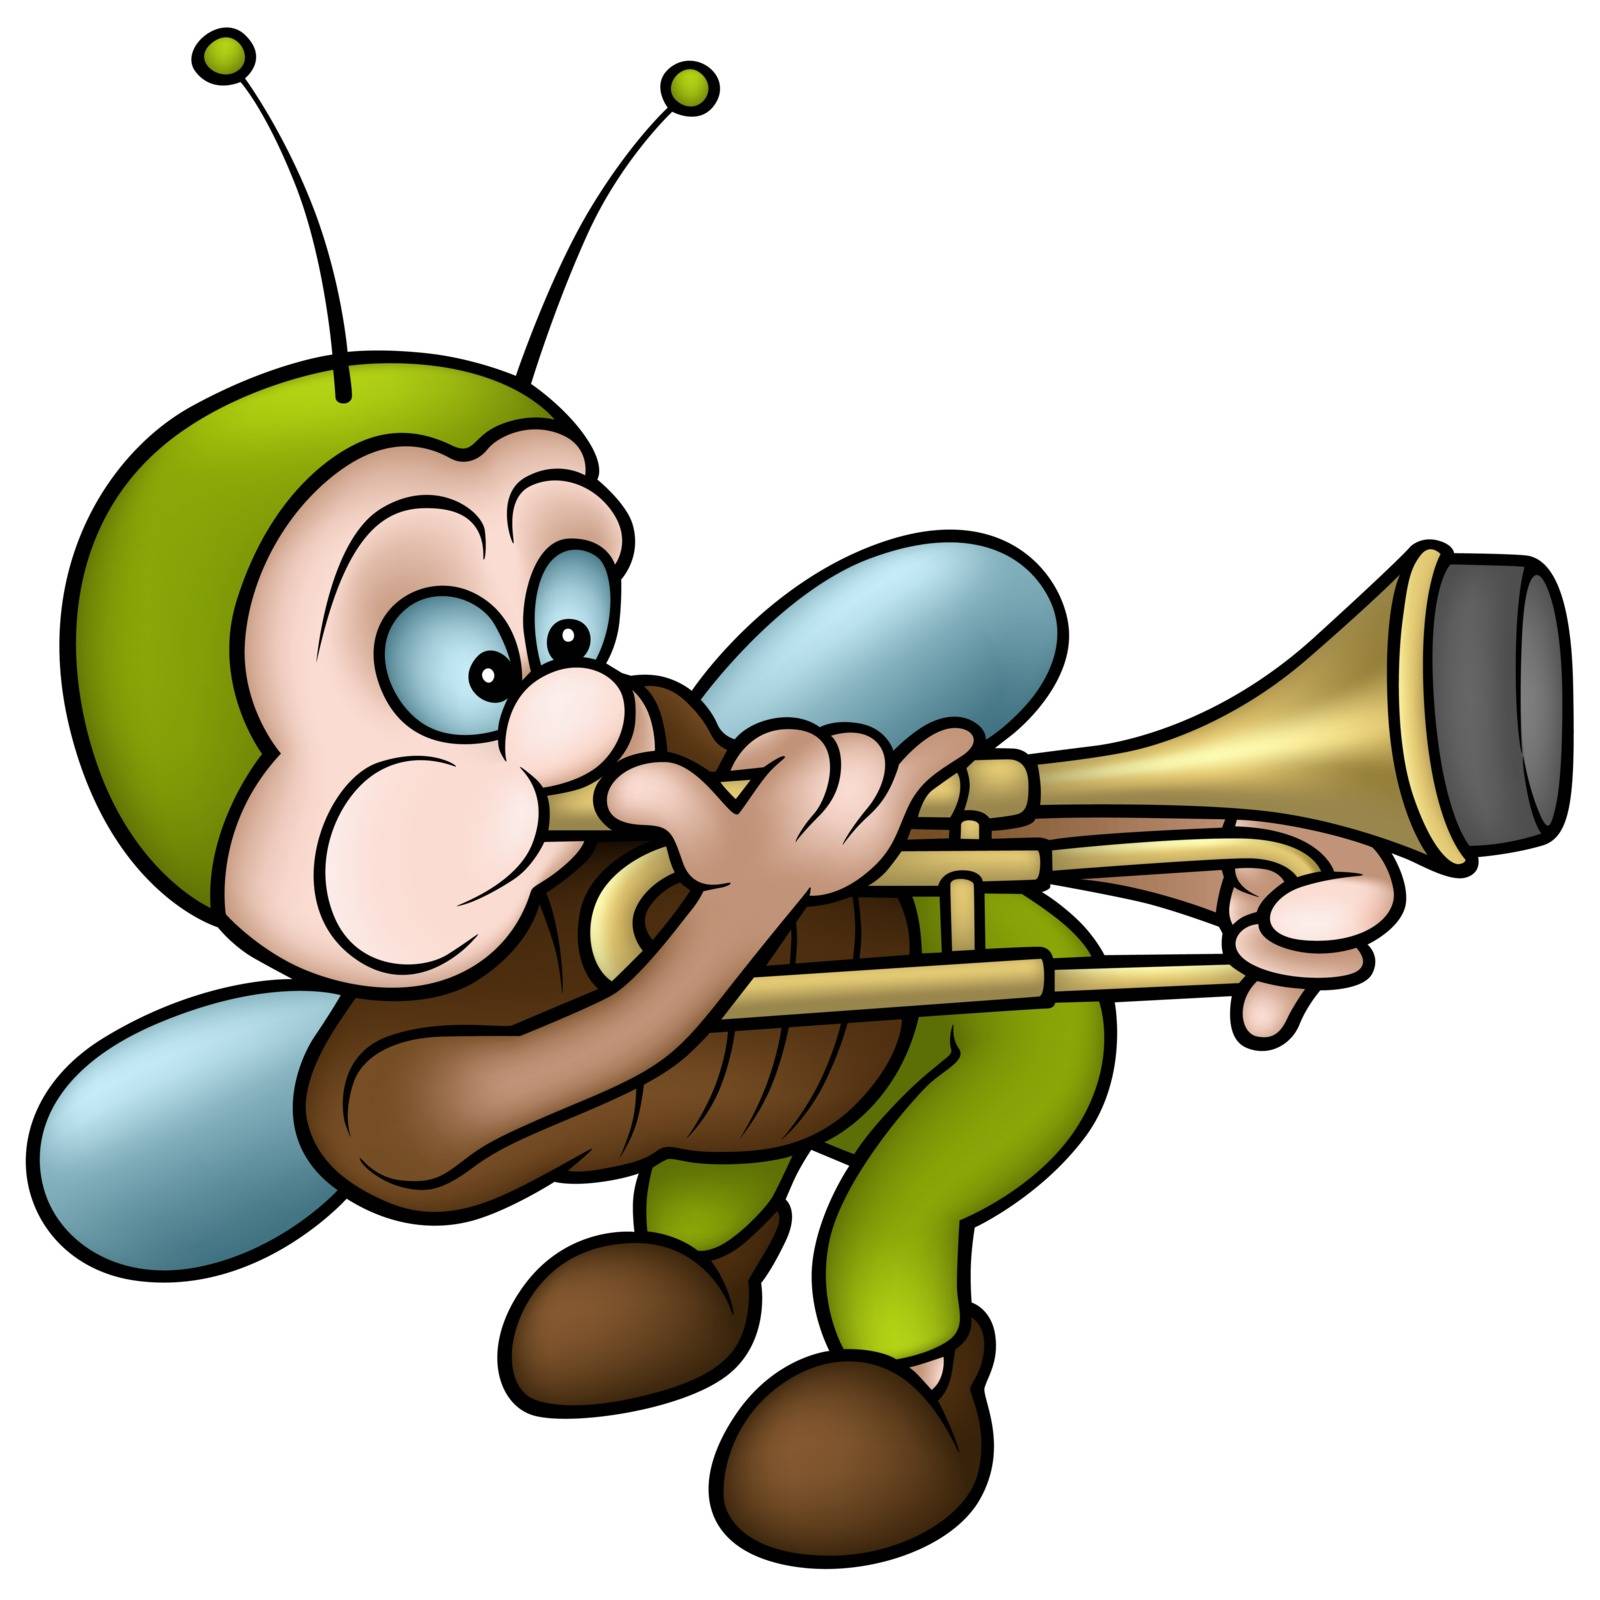 Bug And Trombone by illustratorCZ